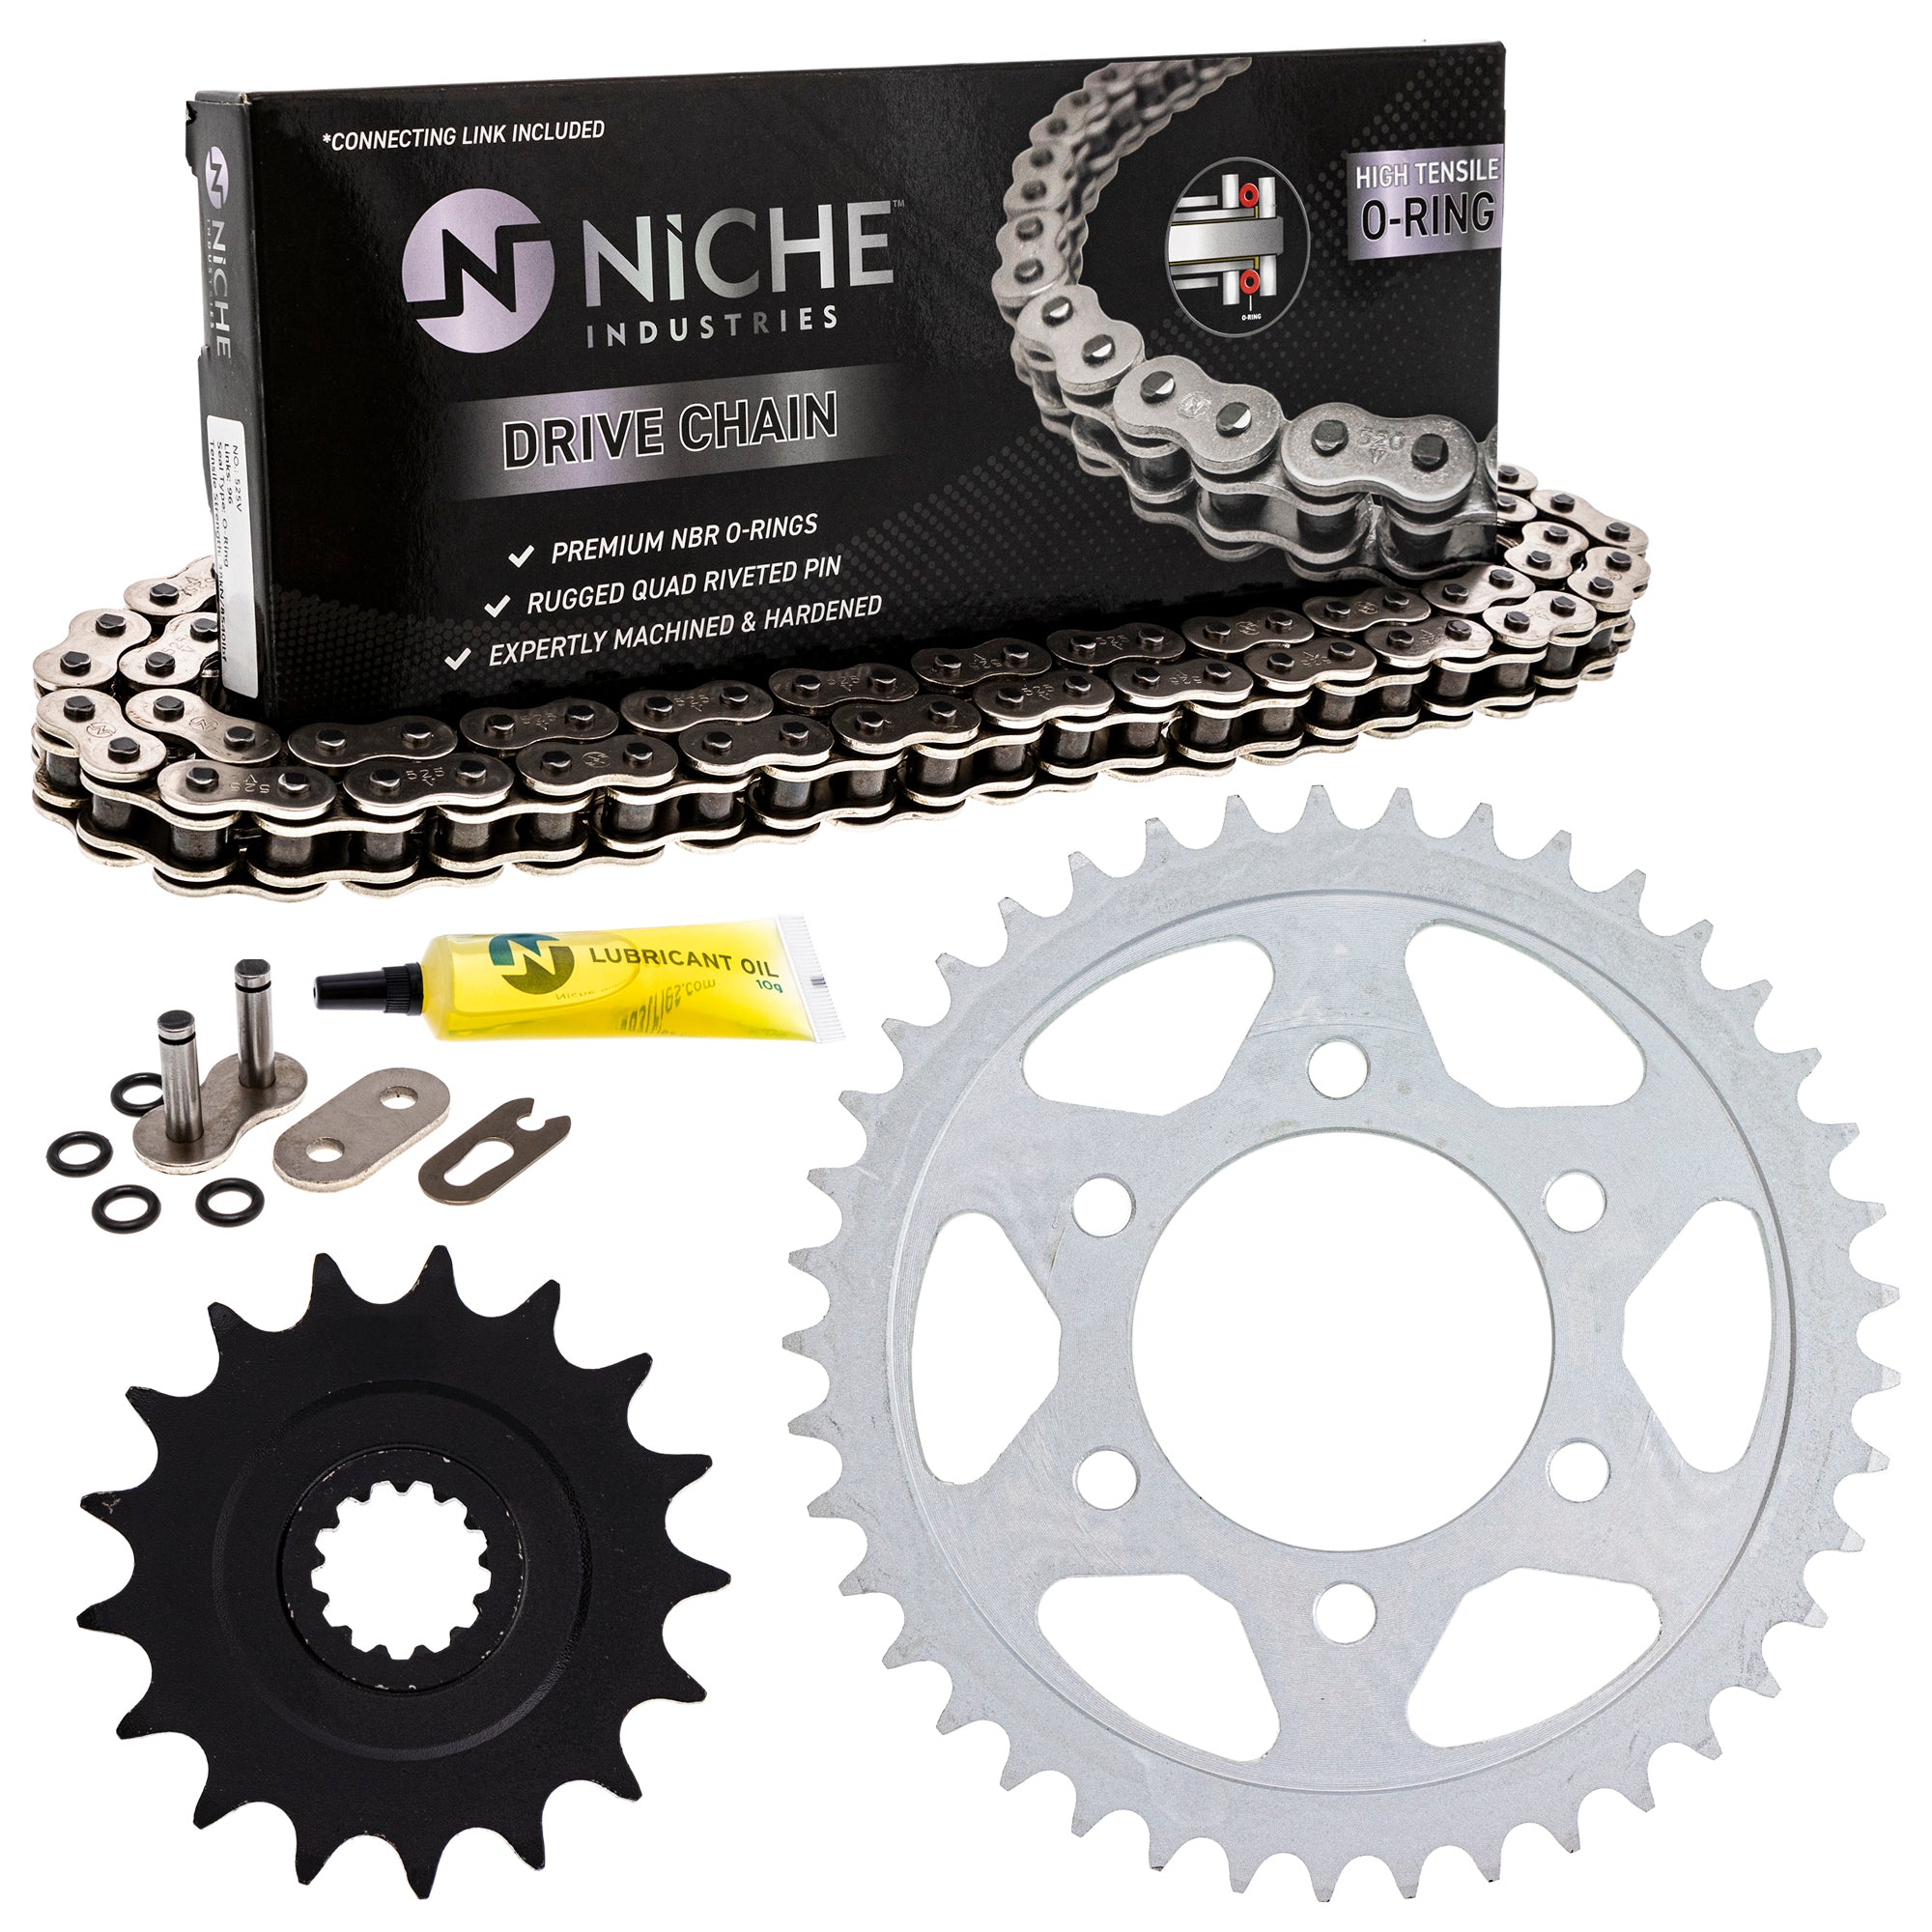 Drive Sprockets & Chain Kit for zOTHER Ninja 519-KCS0809K-K001 NICHE MK1004337